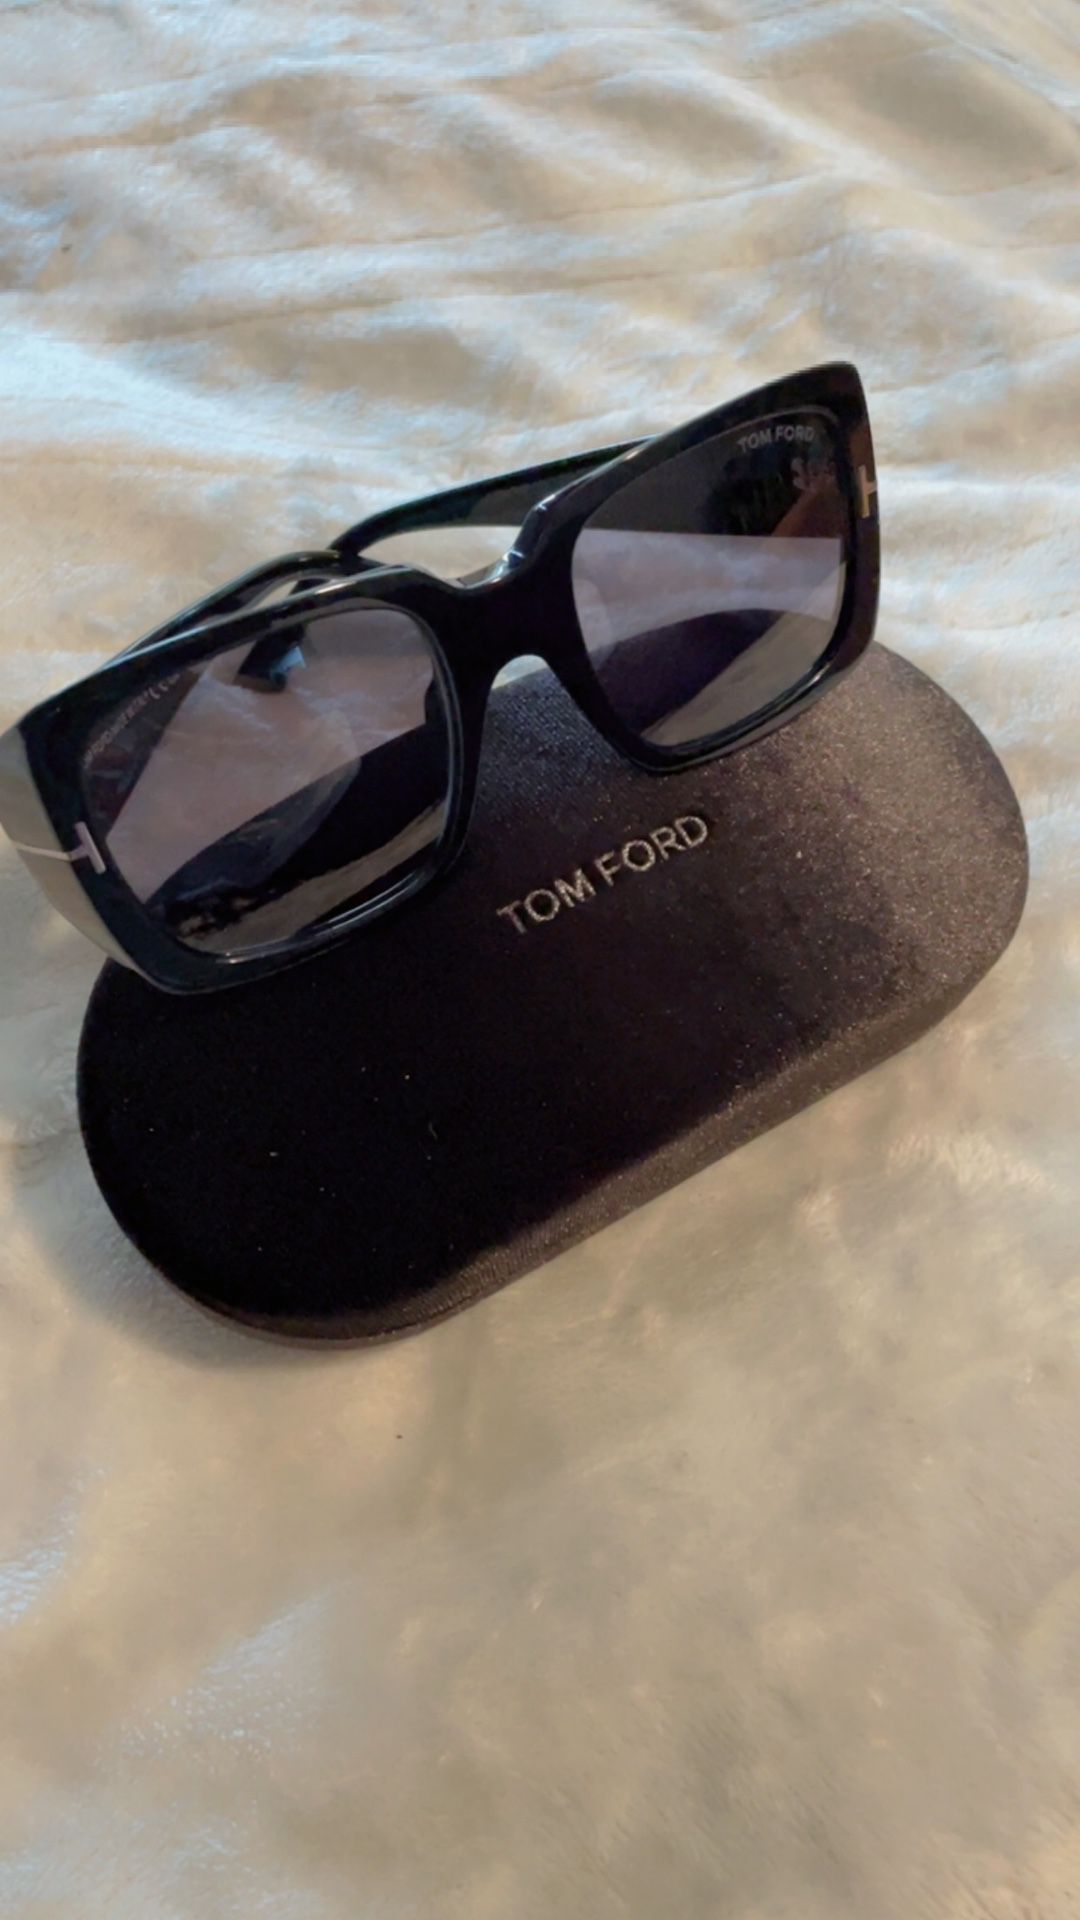 TOM FORD Sunglasses/Shades